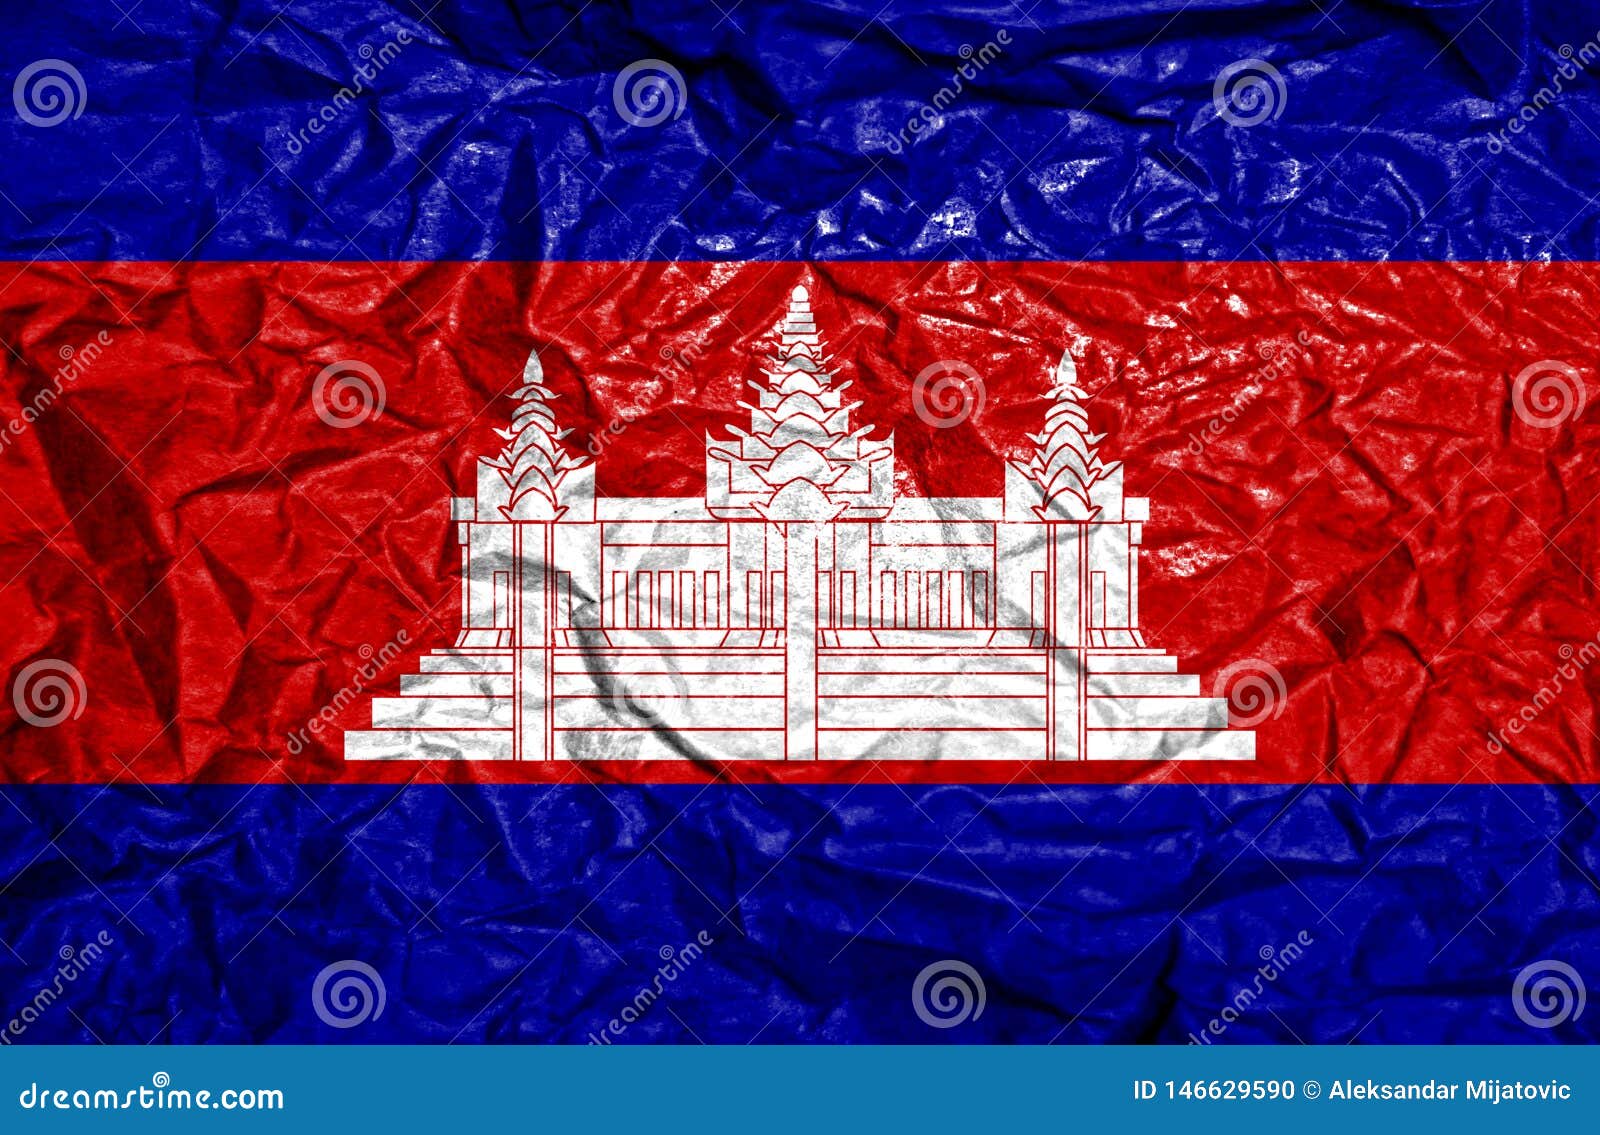 Download Cambodia Flag Royalty-Free Stock Image | CartoonDealer.com ...